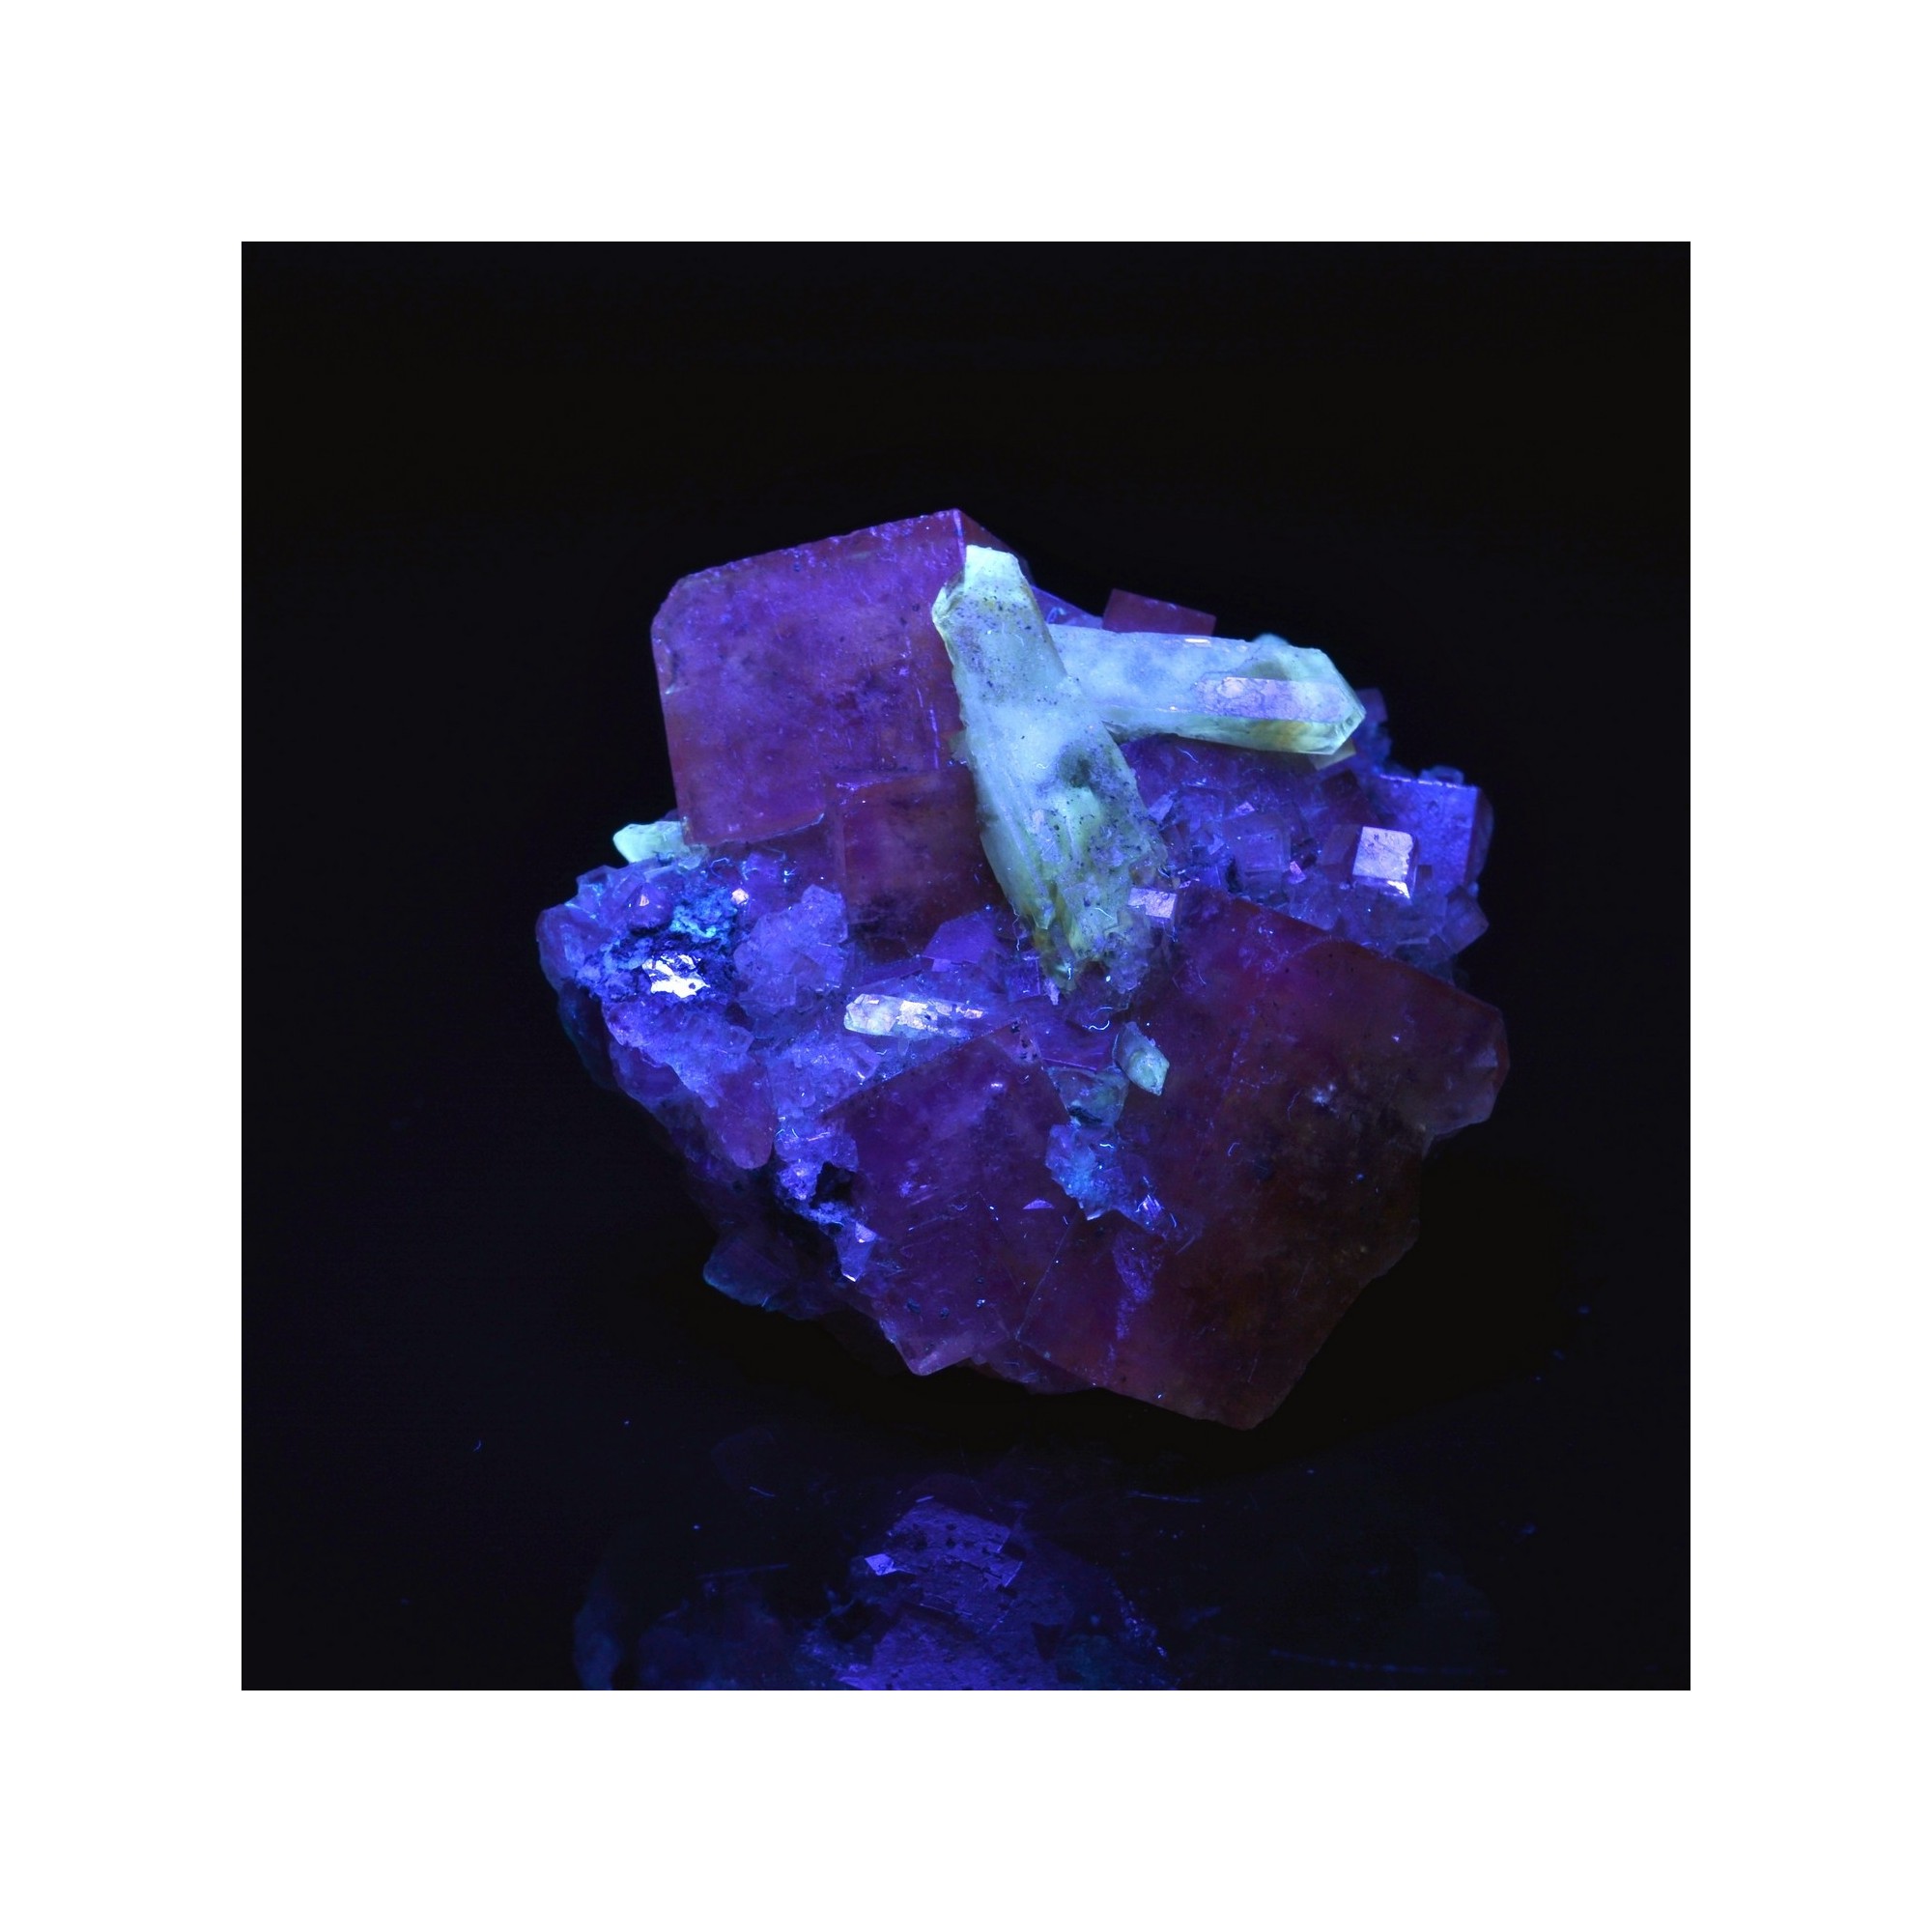 Fluorite, barite and galena - Bergmännisch Glück mine, Germany